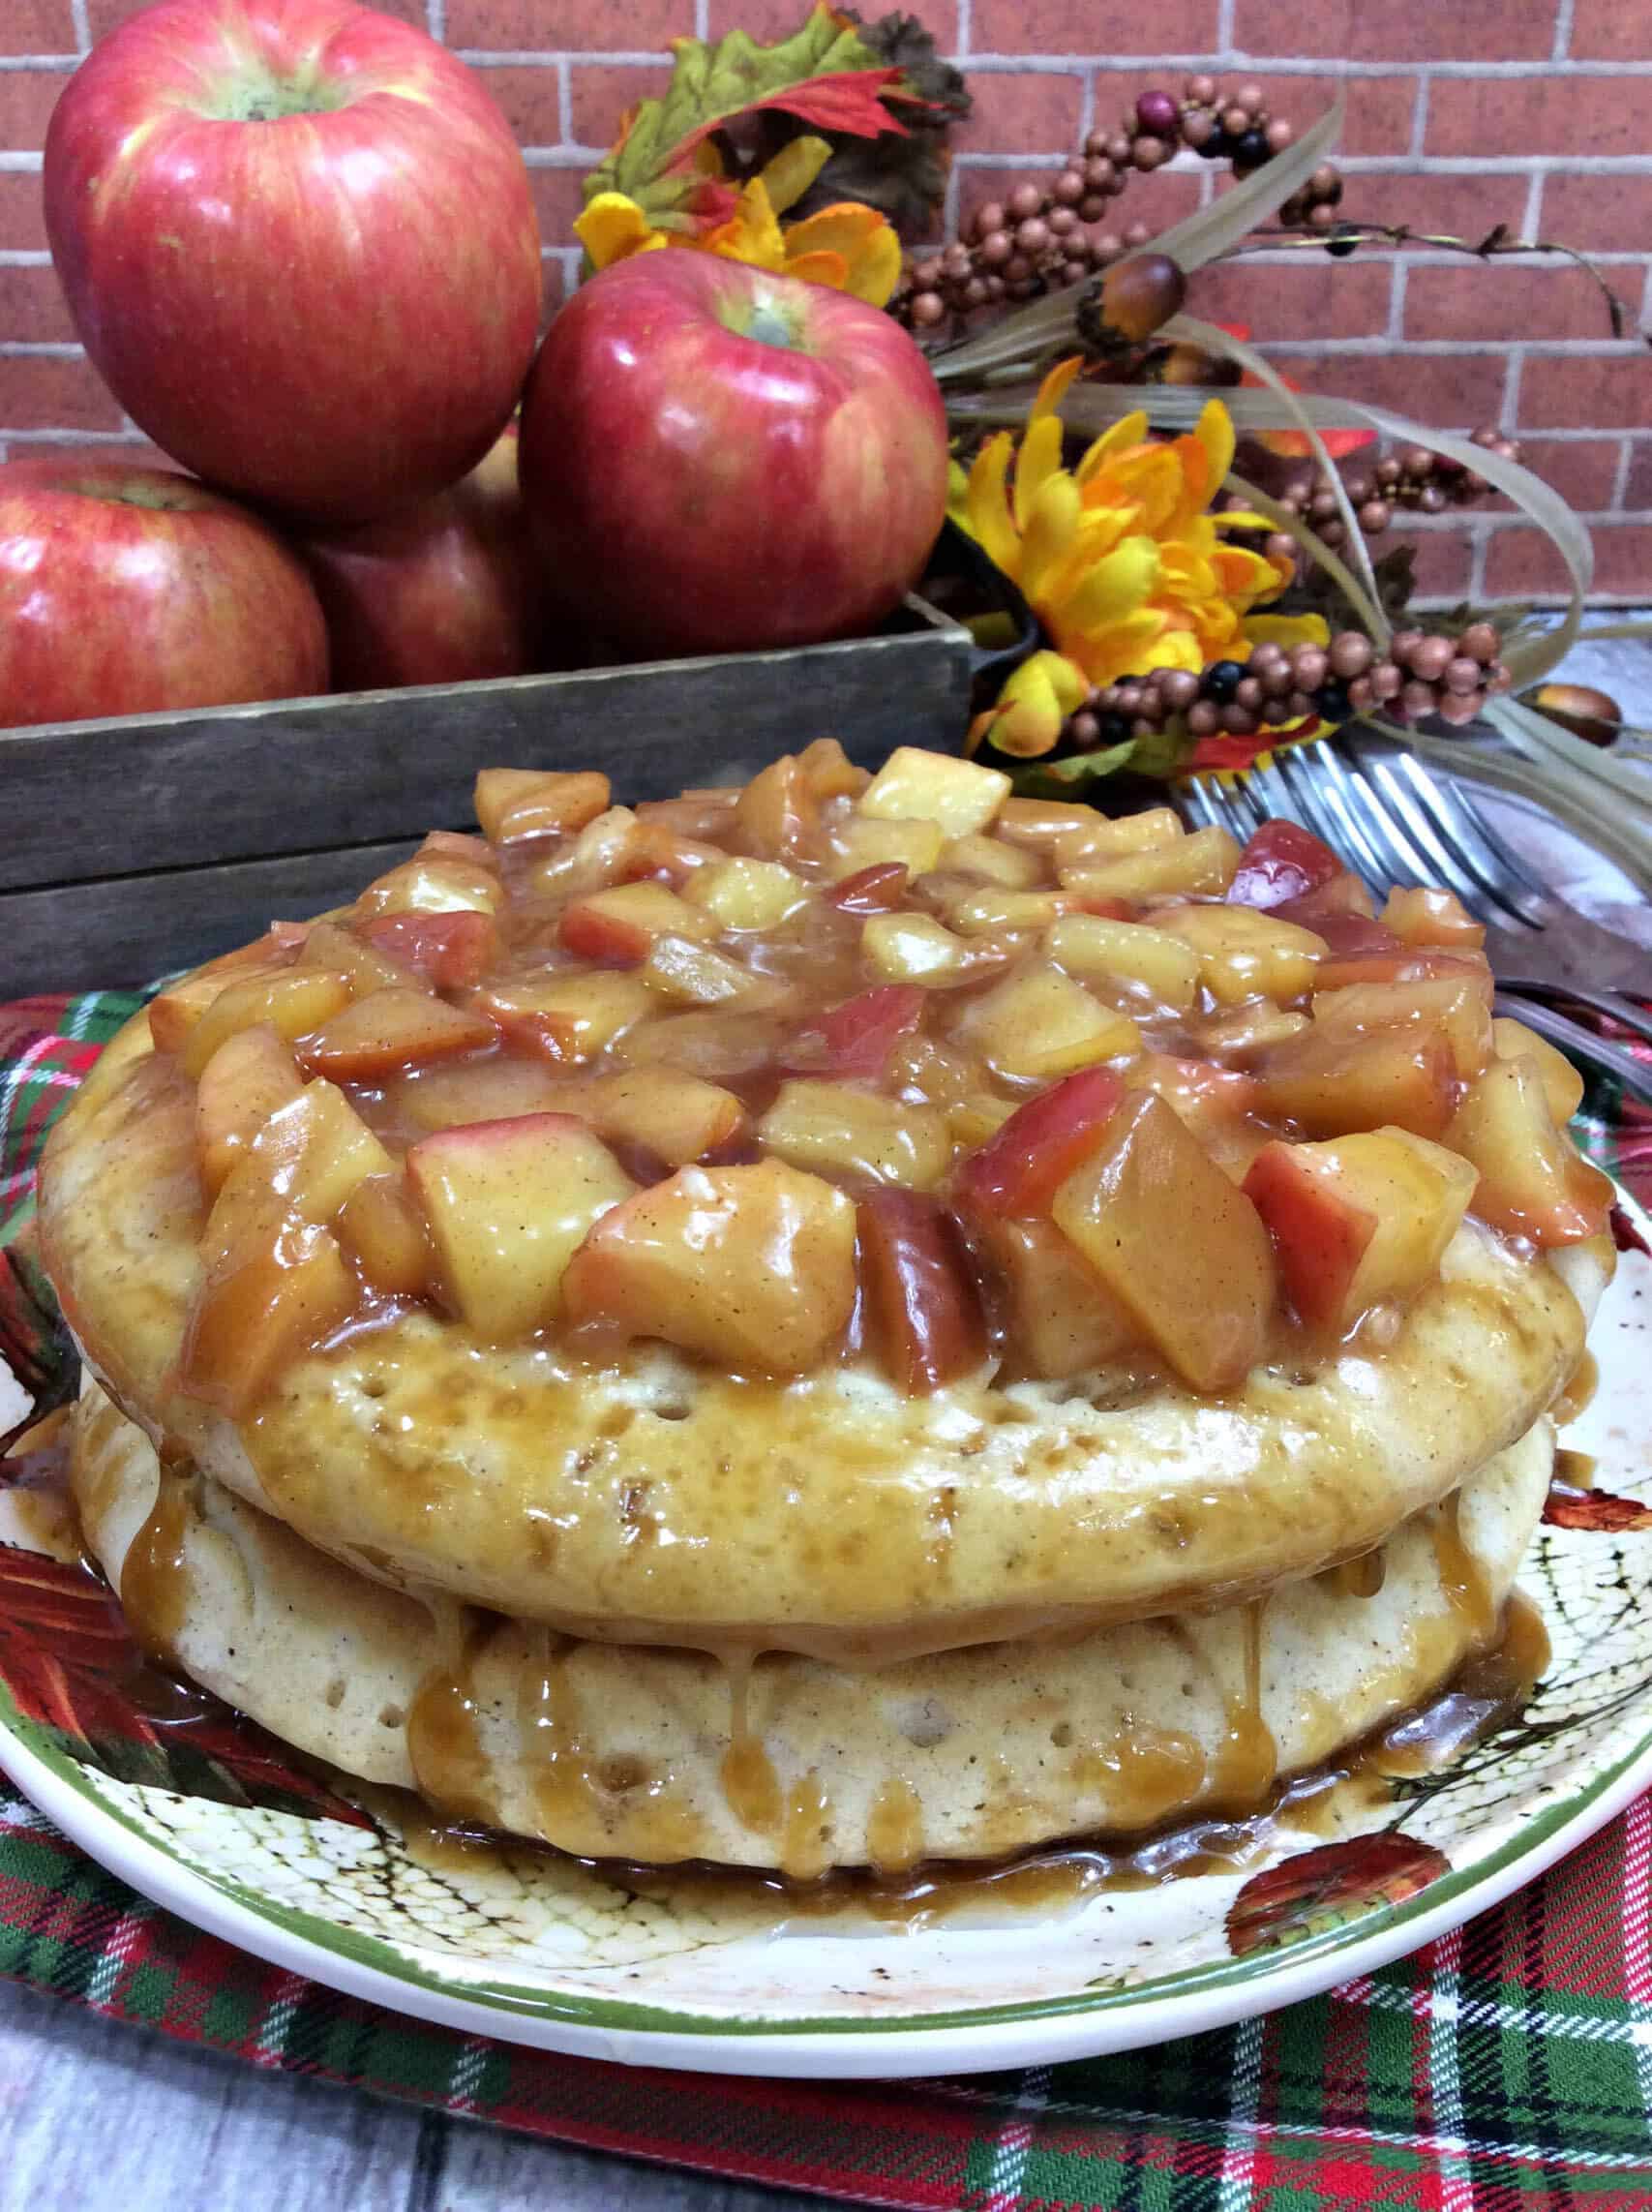 Apple Pie Pancakes with Vanilla Maple Syrup